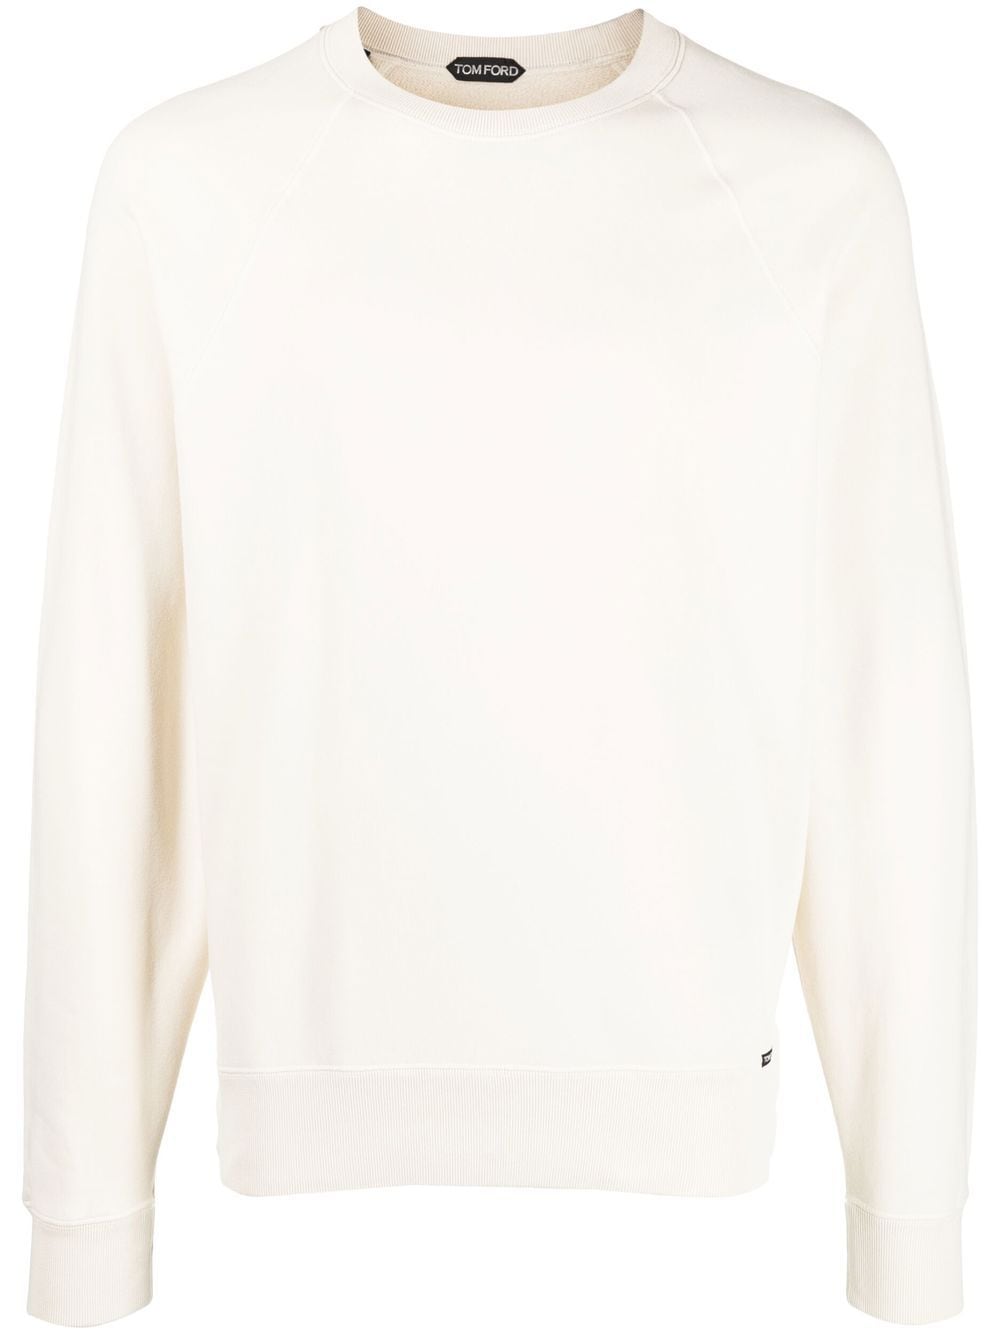 TOM FORD crew-neck raglan-sleeve sweatshirt - White